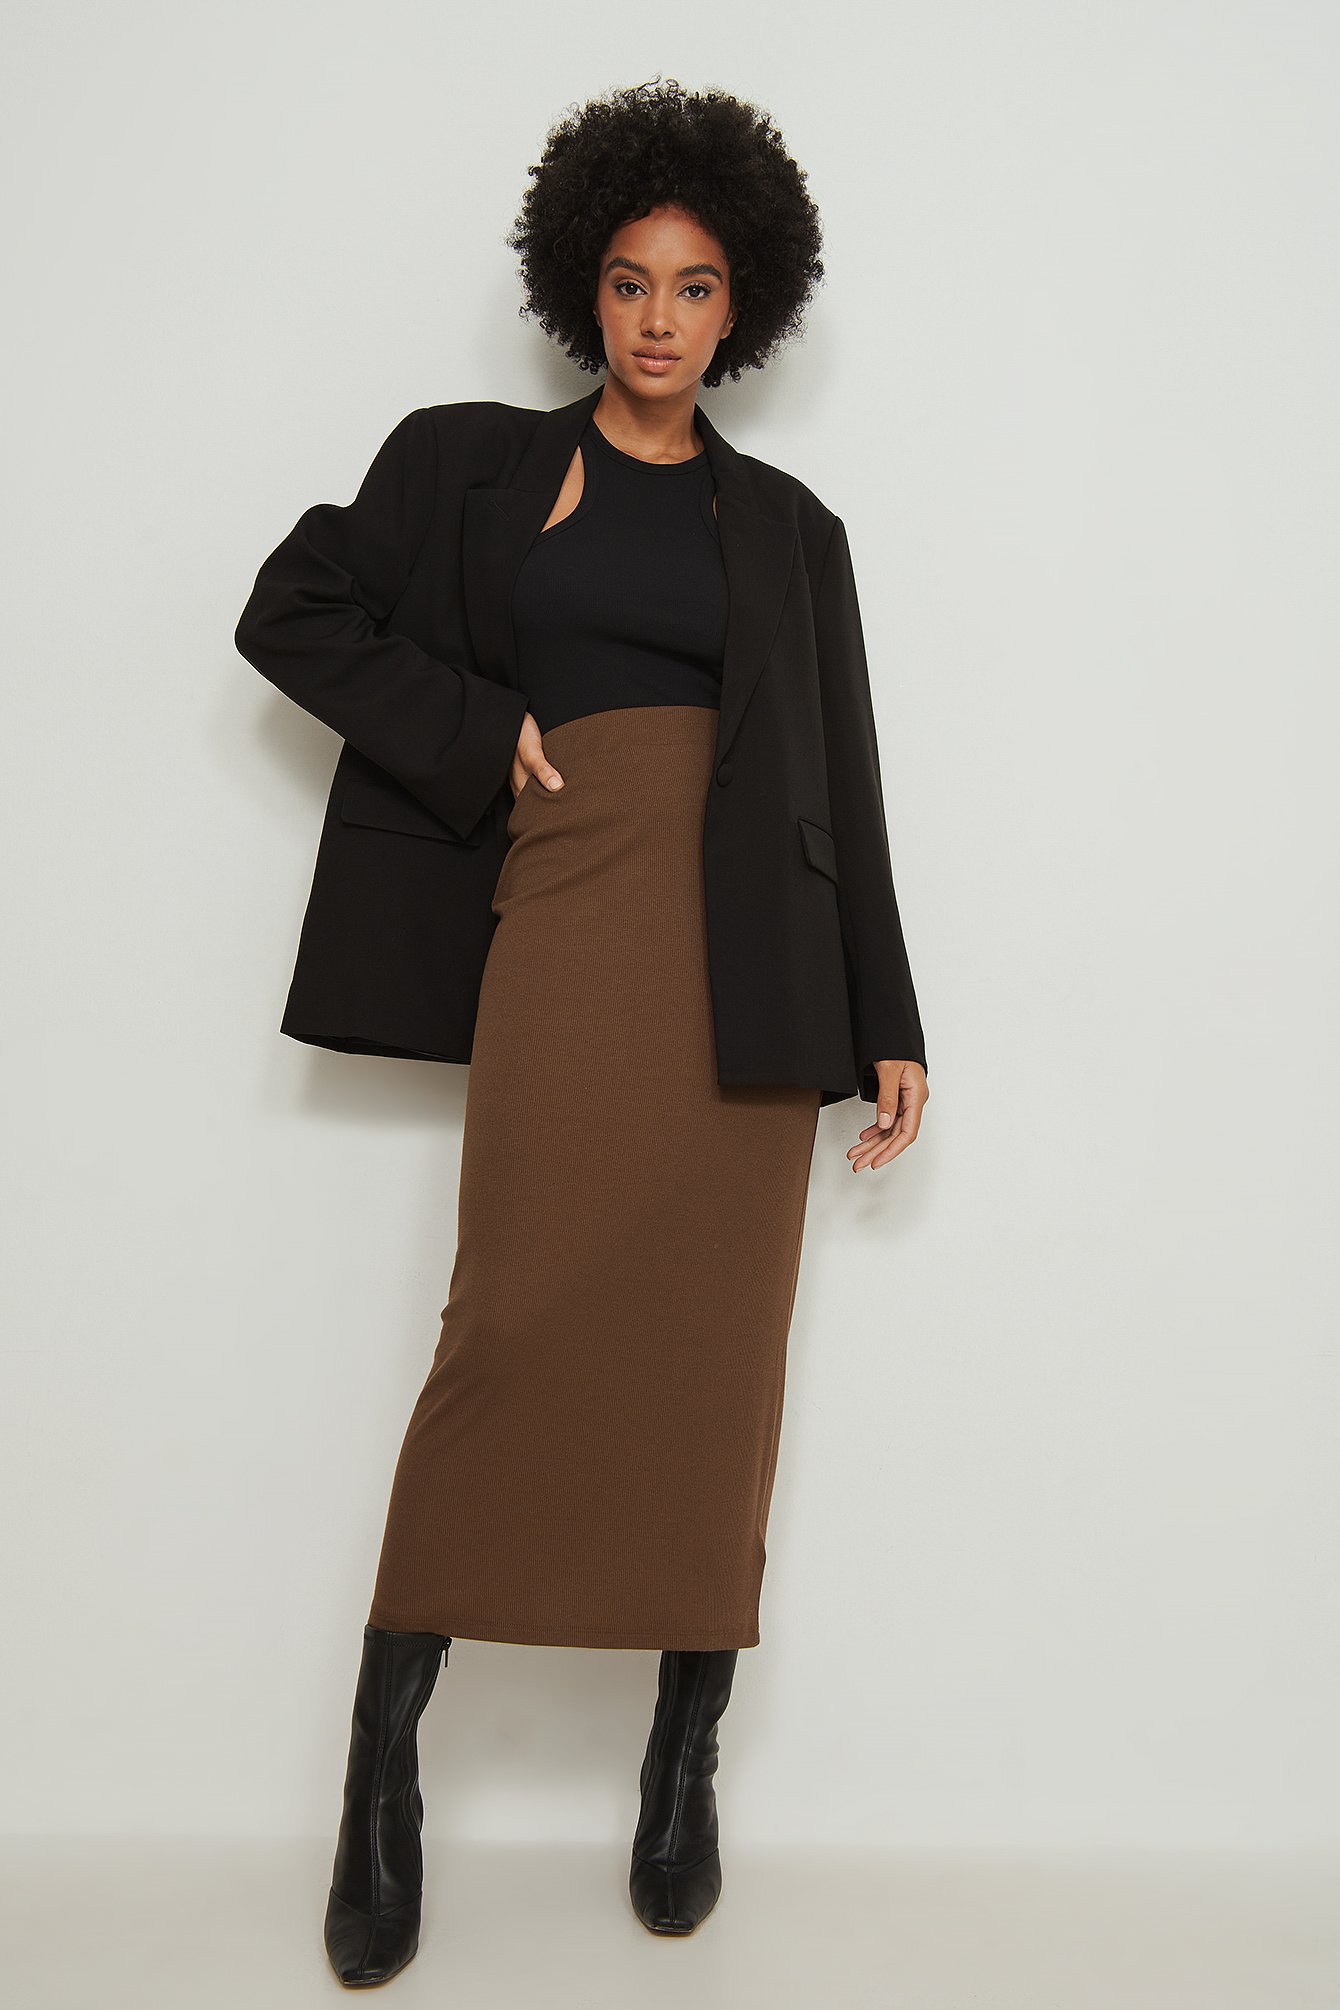 Top 40+ imagen brown long skirt outfit